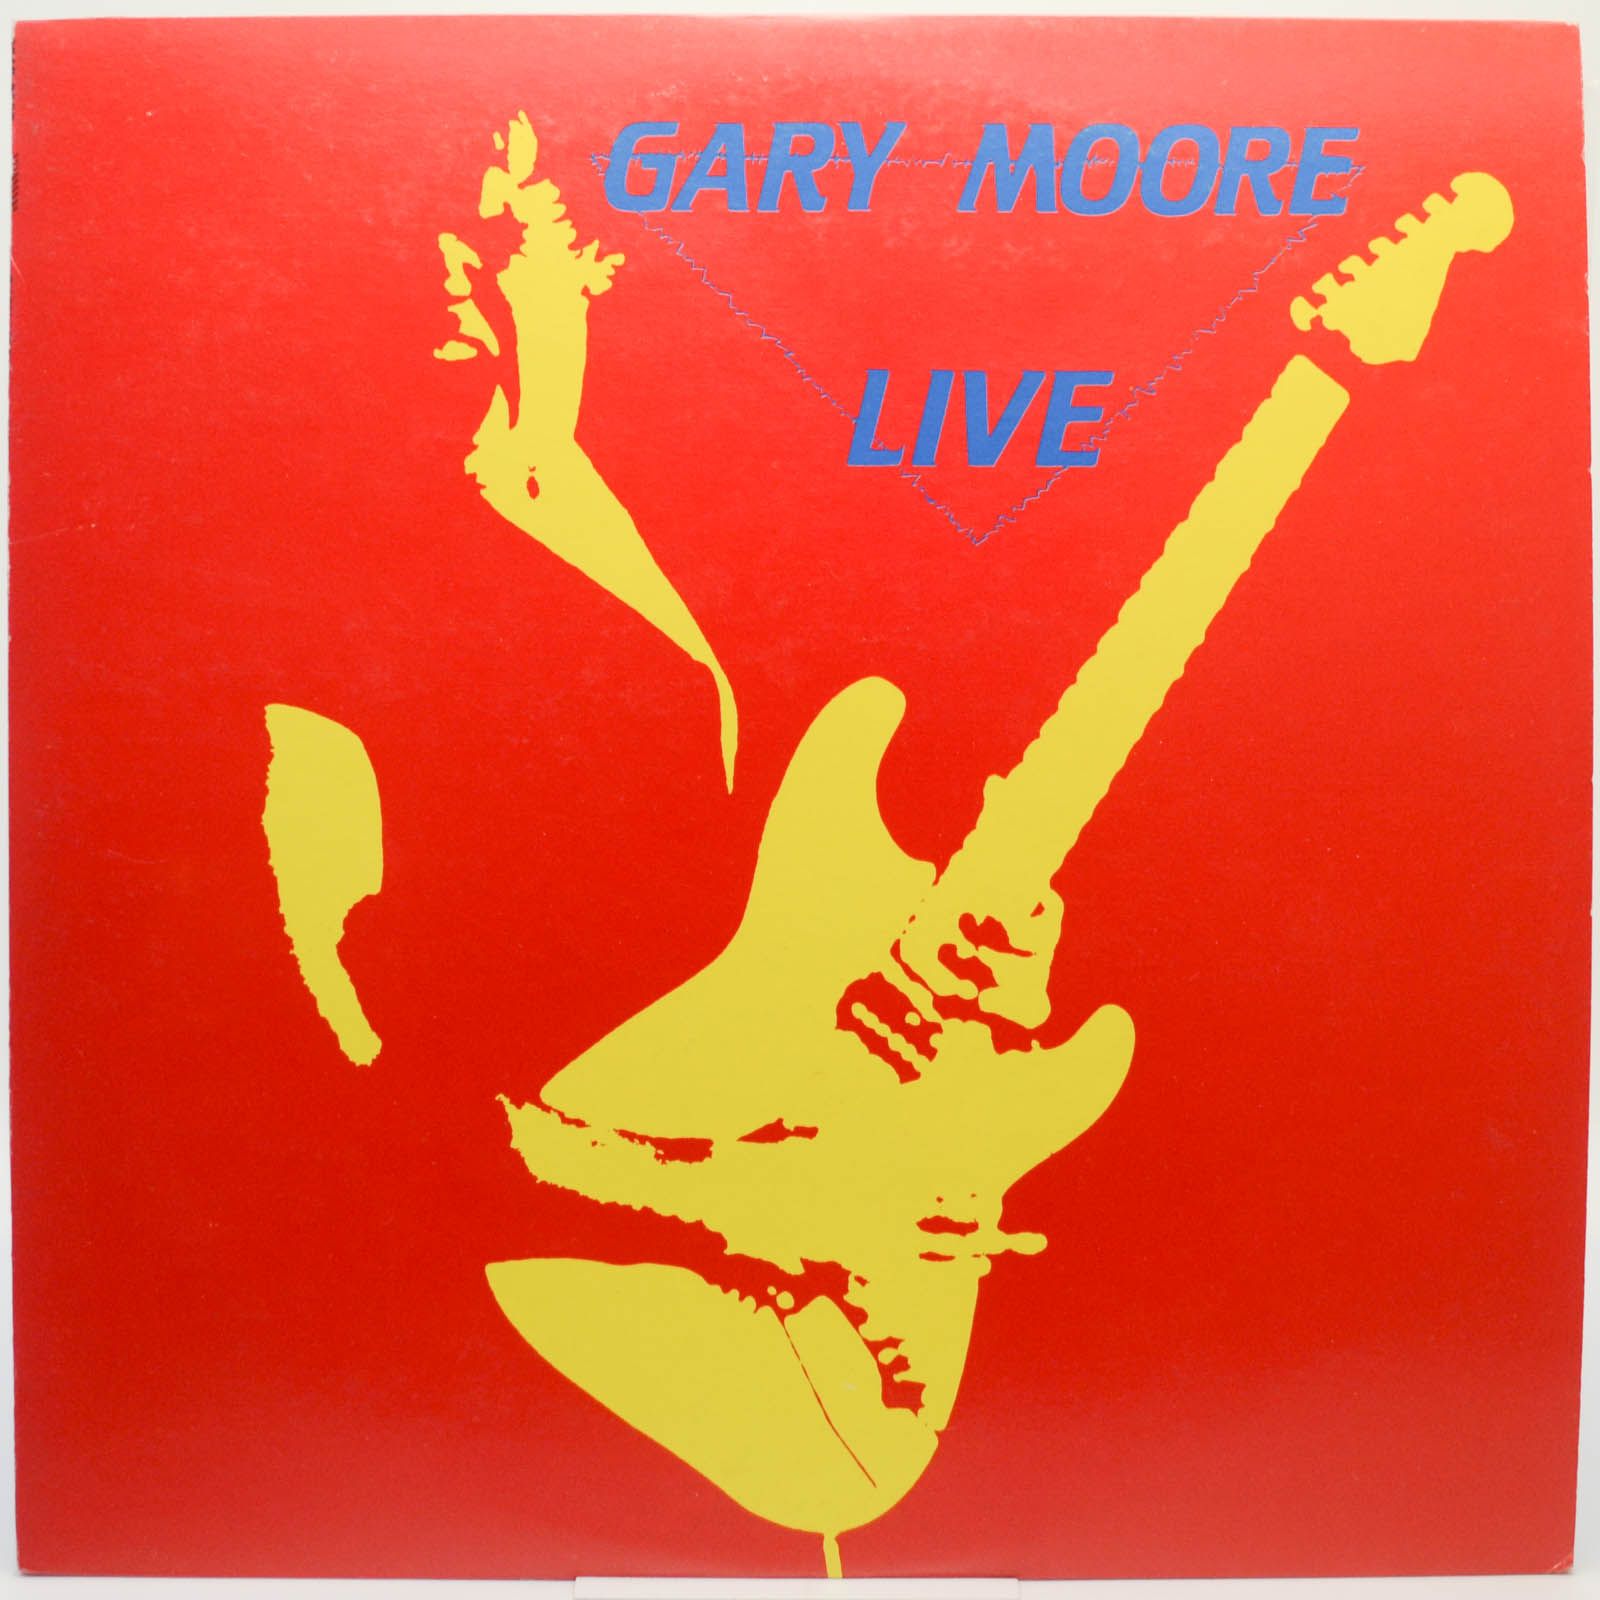 Gary Moore — Live, 1983